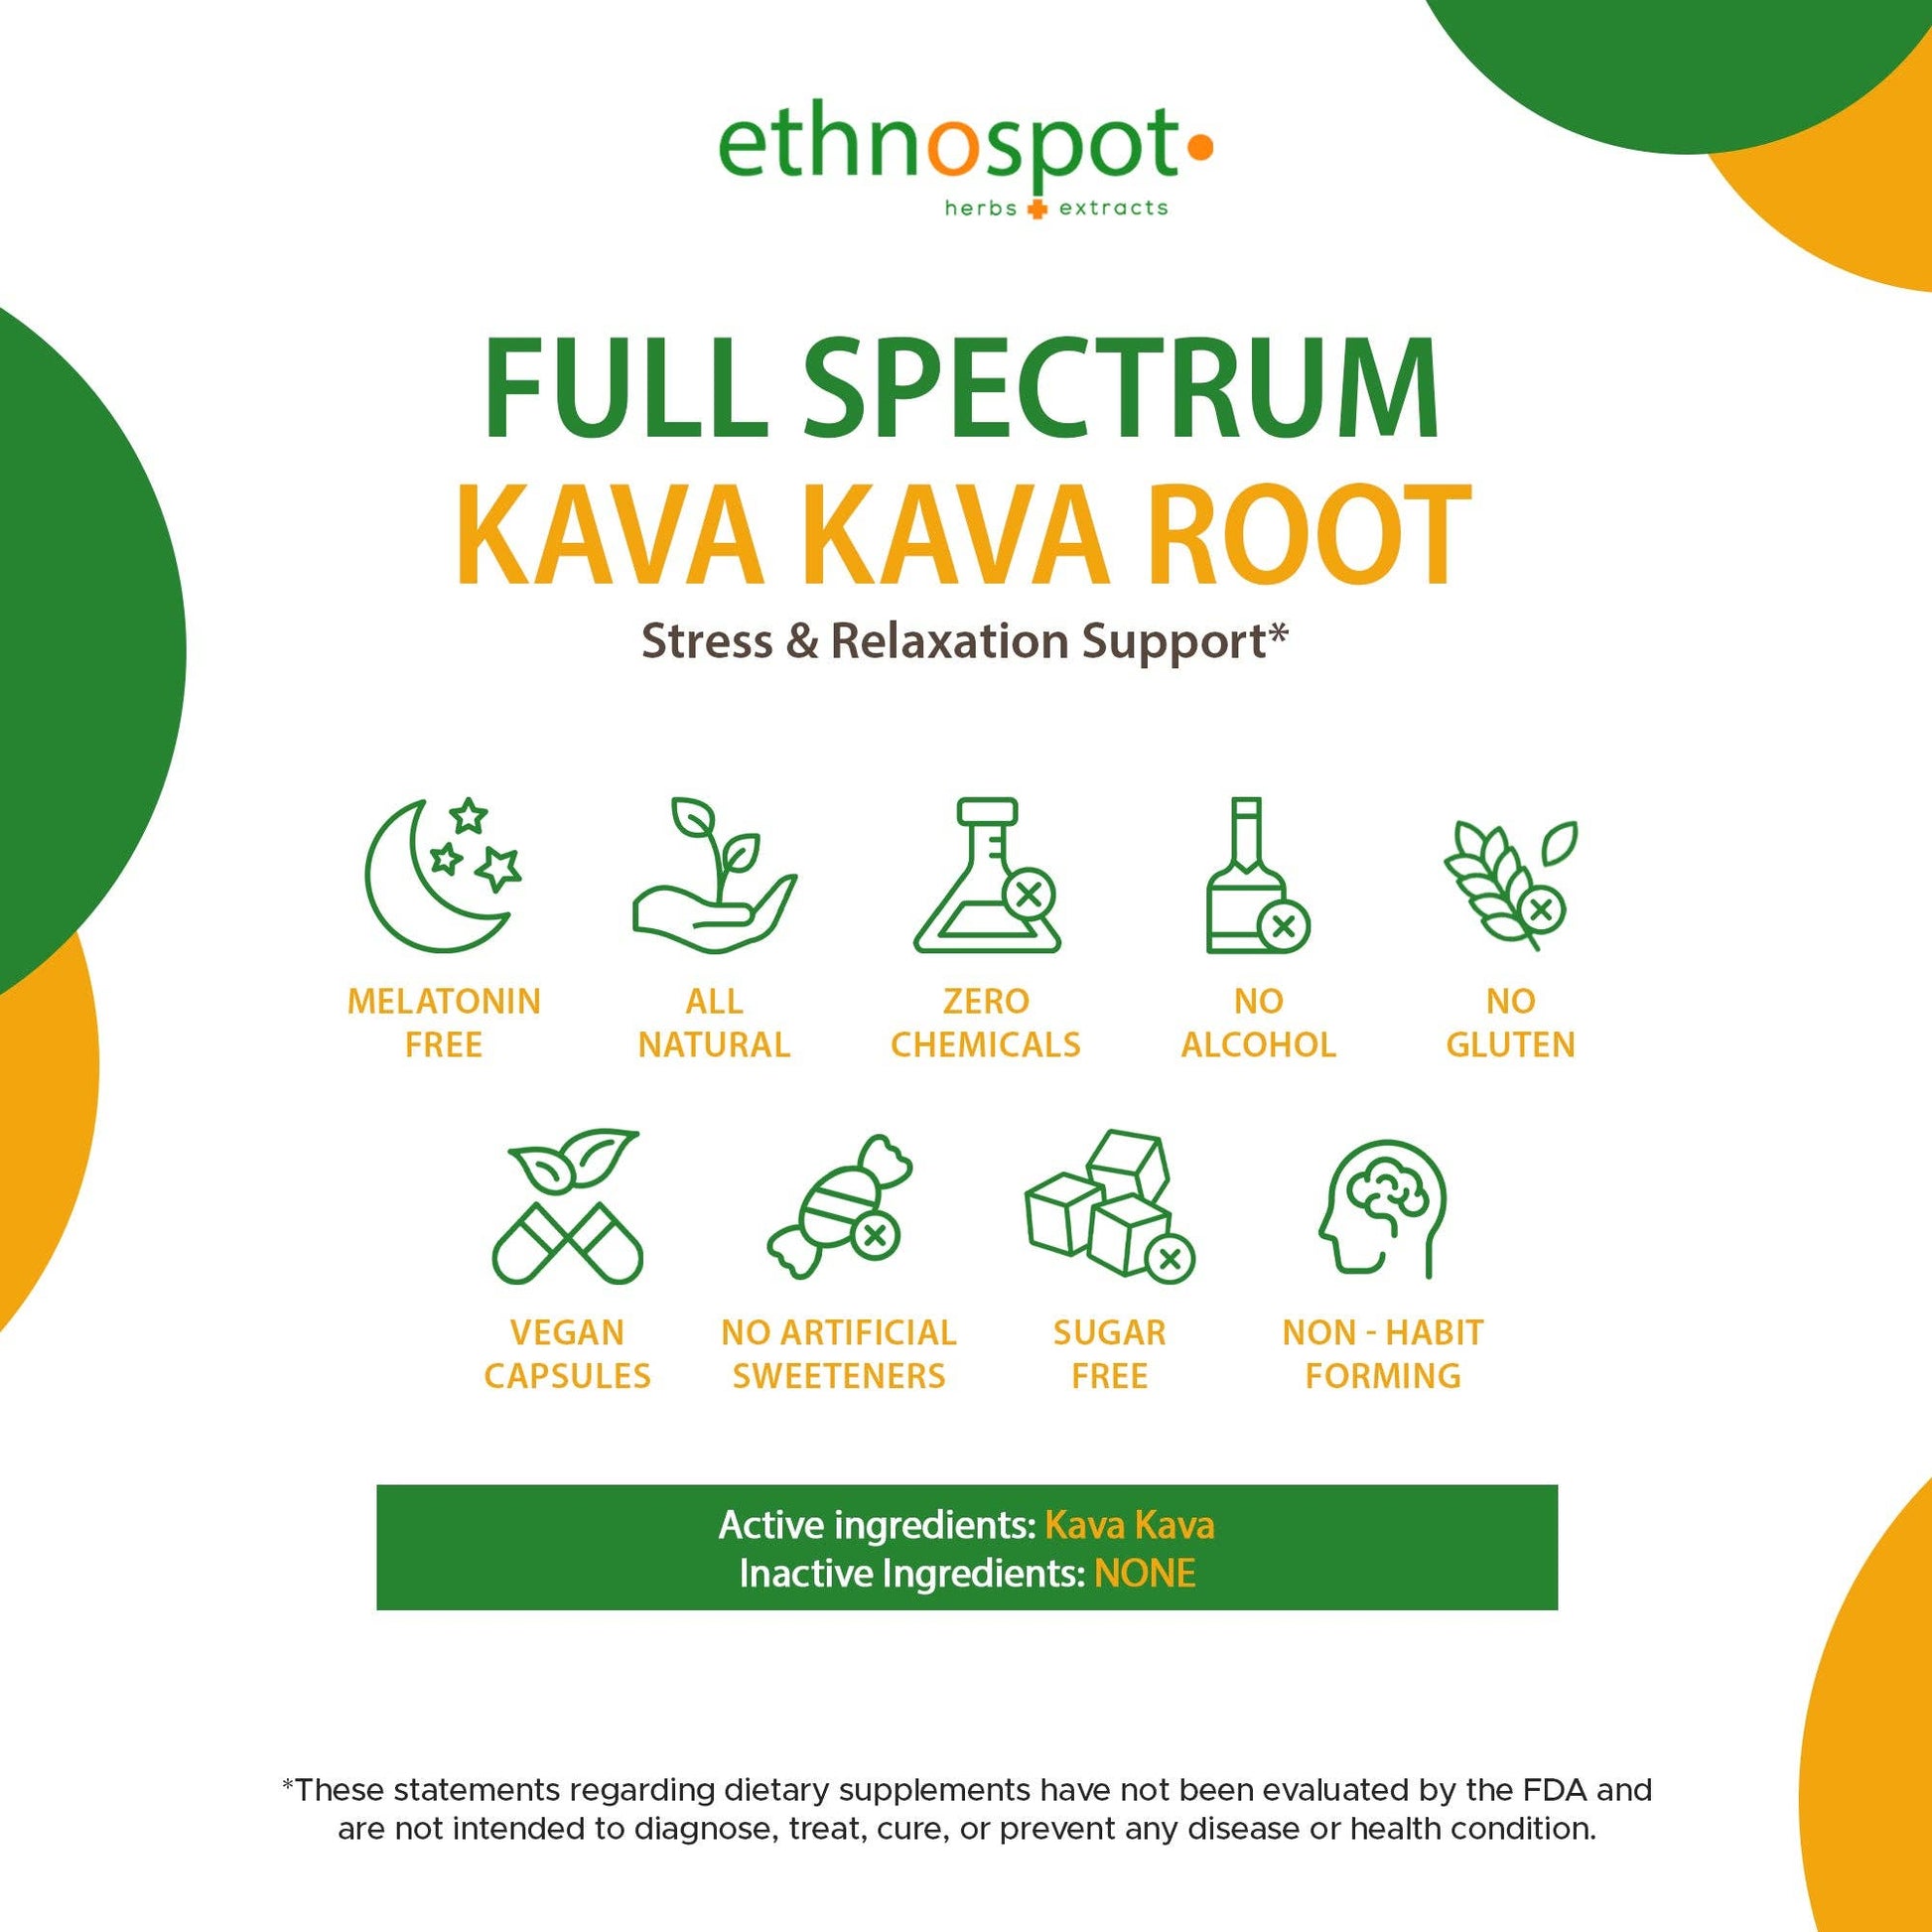 Kava Kava 100% Root, Herbal Supplement, 125 Vegetable Capsules - Spring Street Vitamins